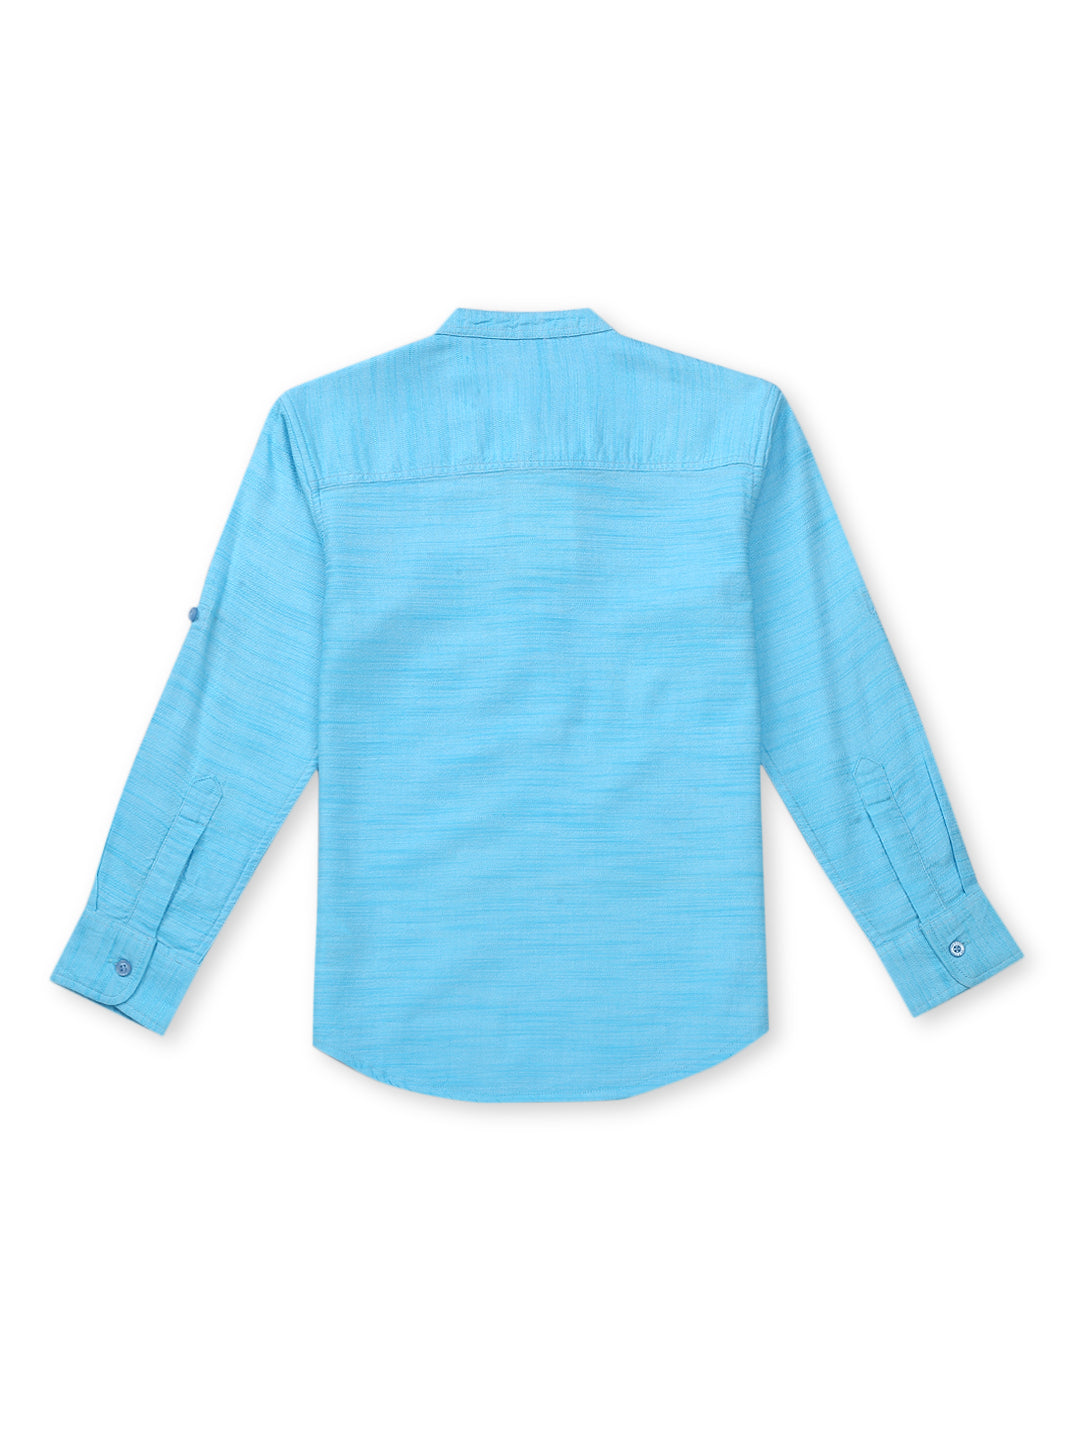 Boys Blue Cotton Solid Shirt